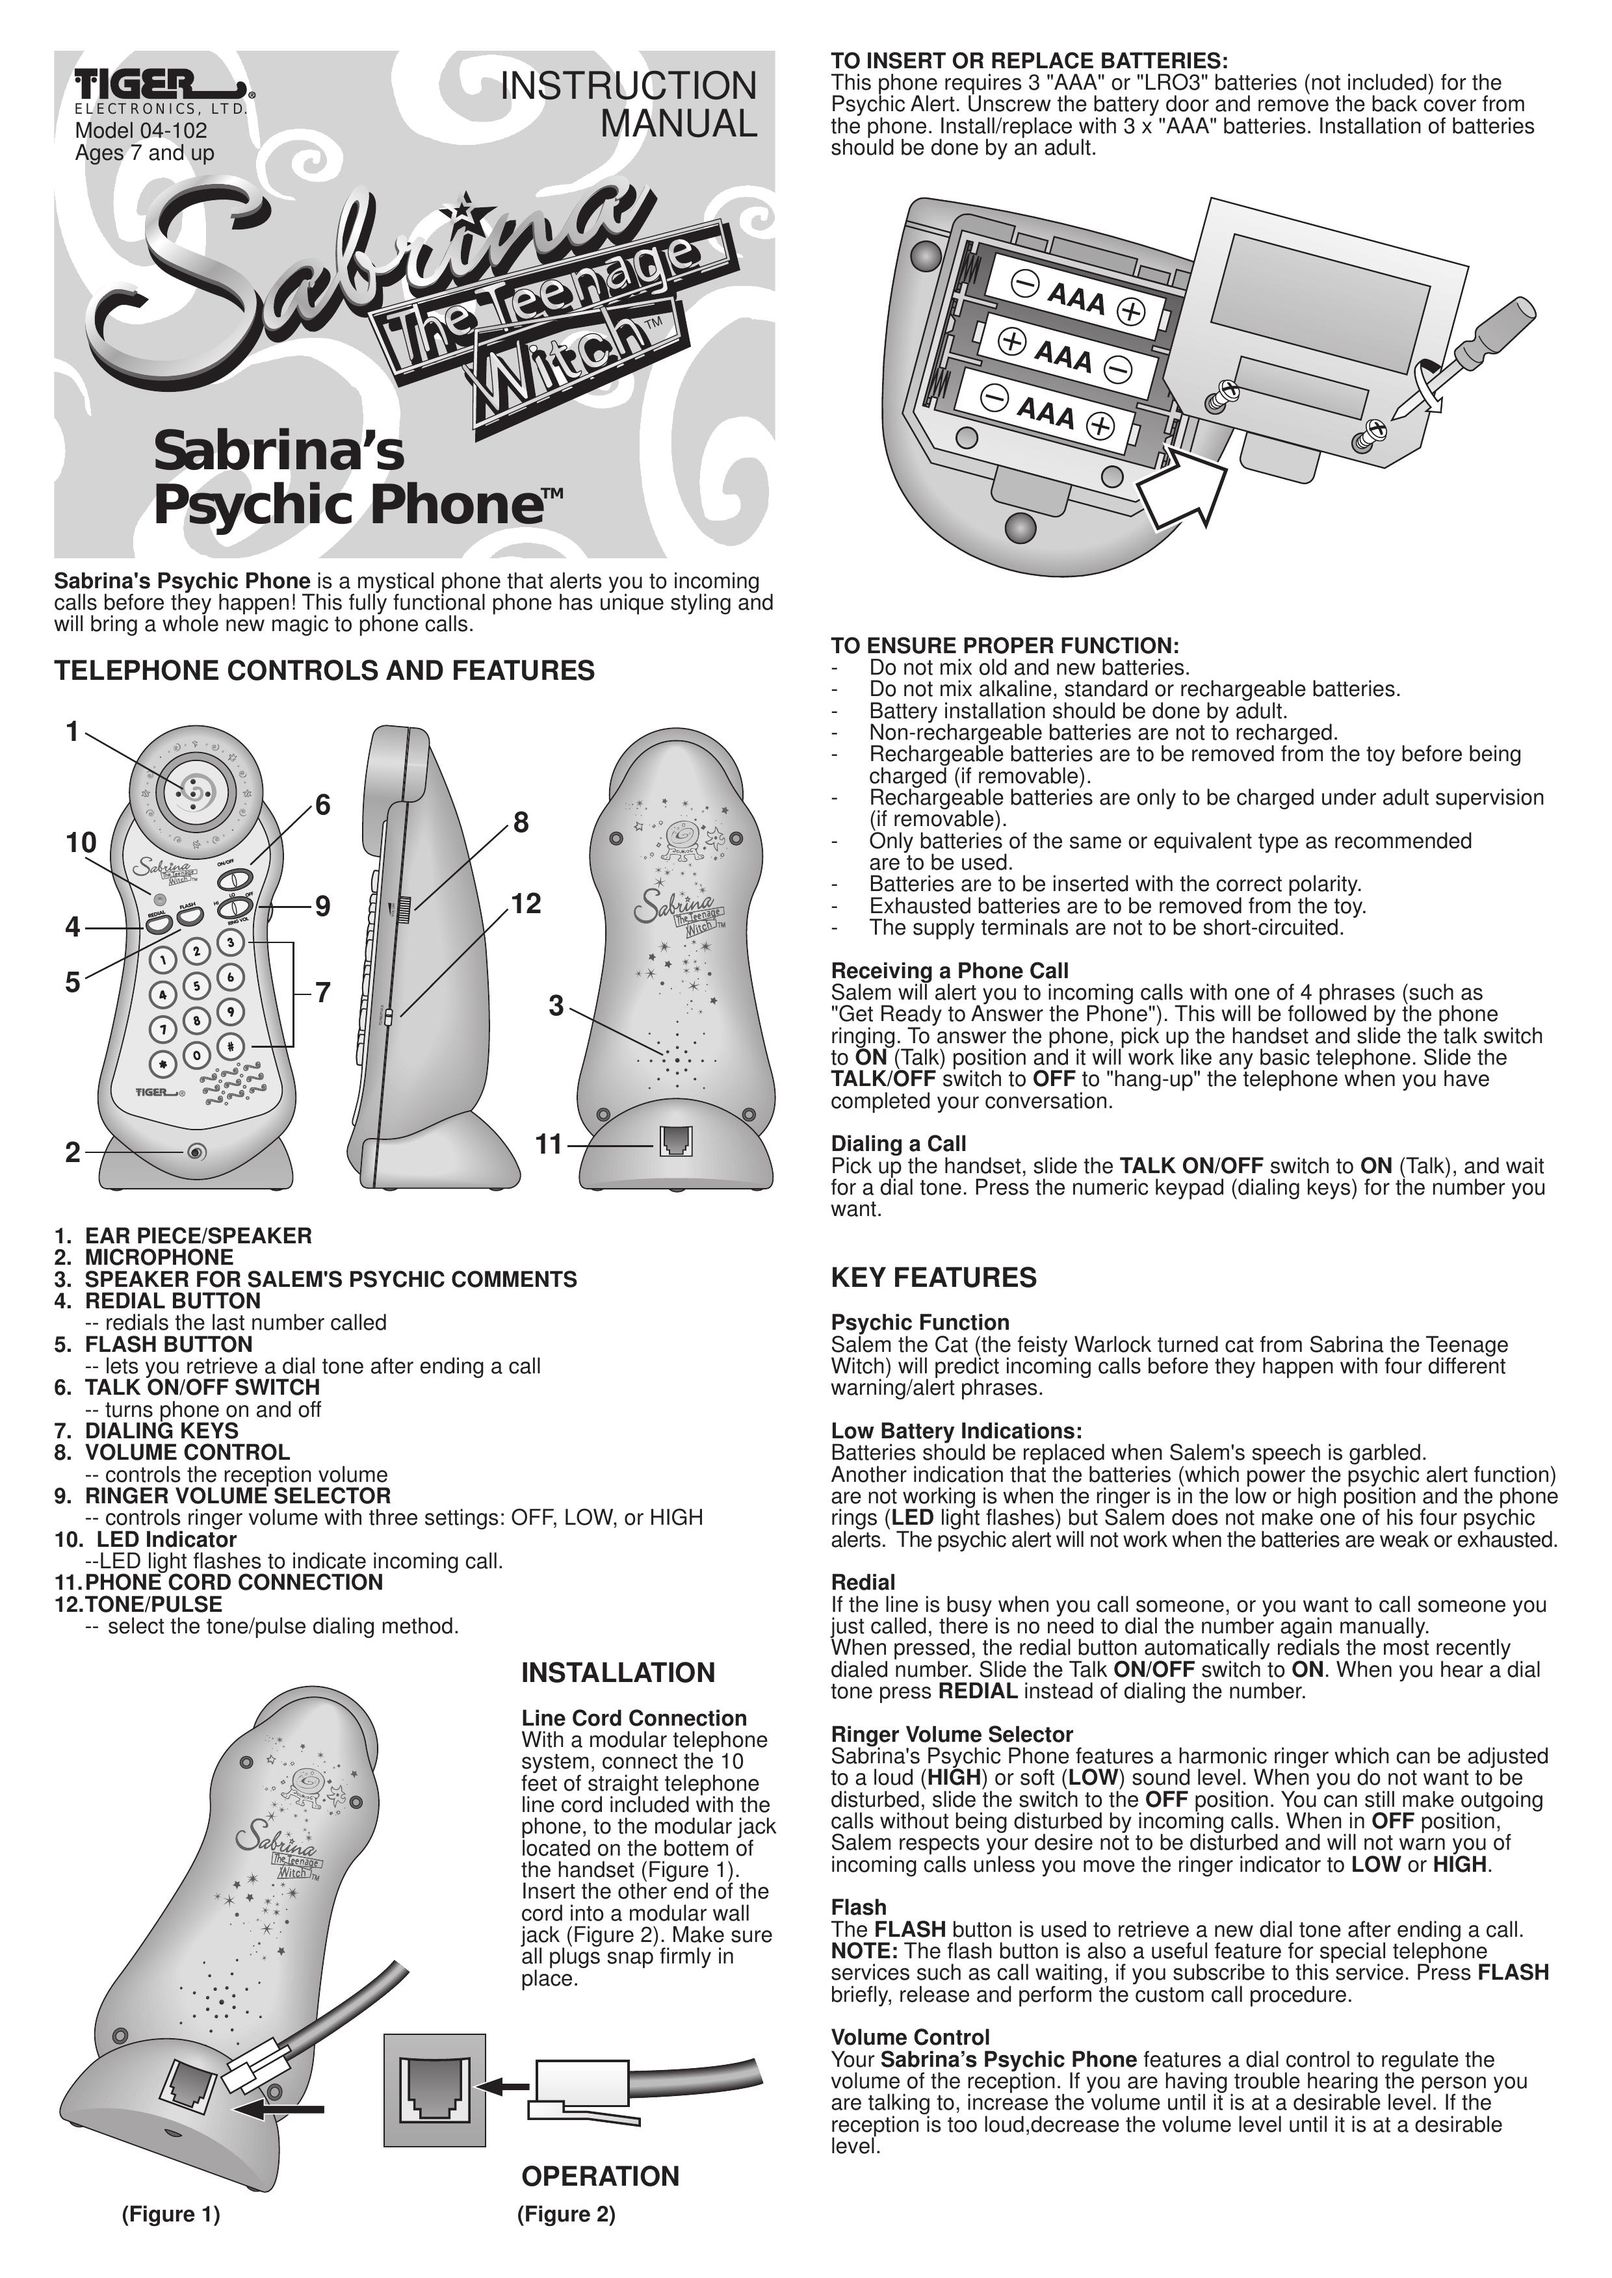 Hasbro 04-102 Telephone User Manual